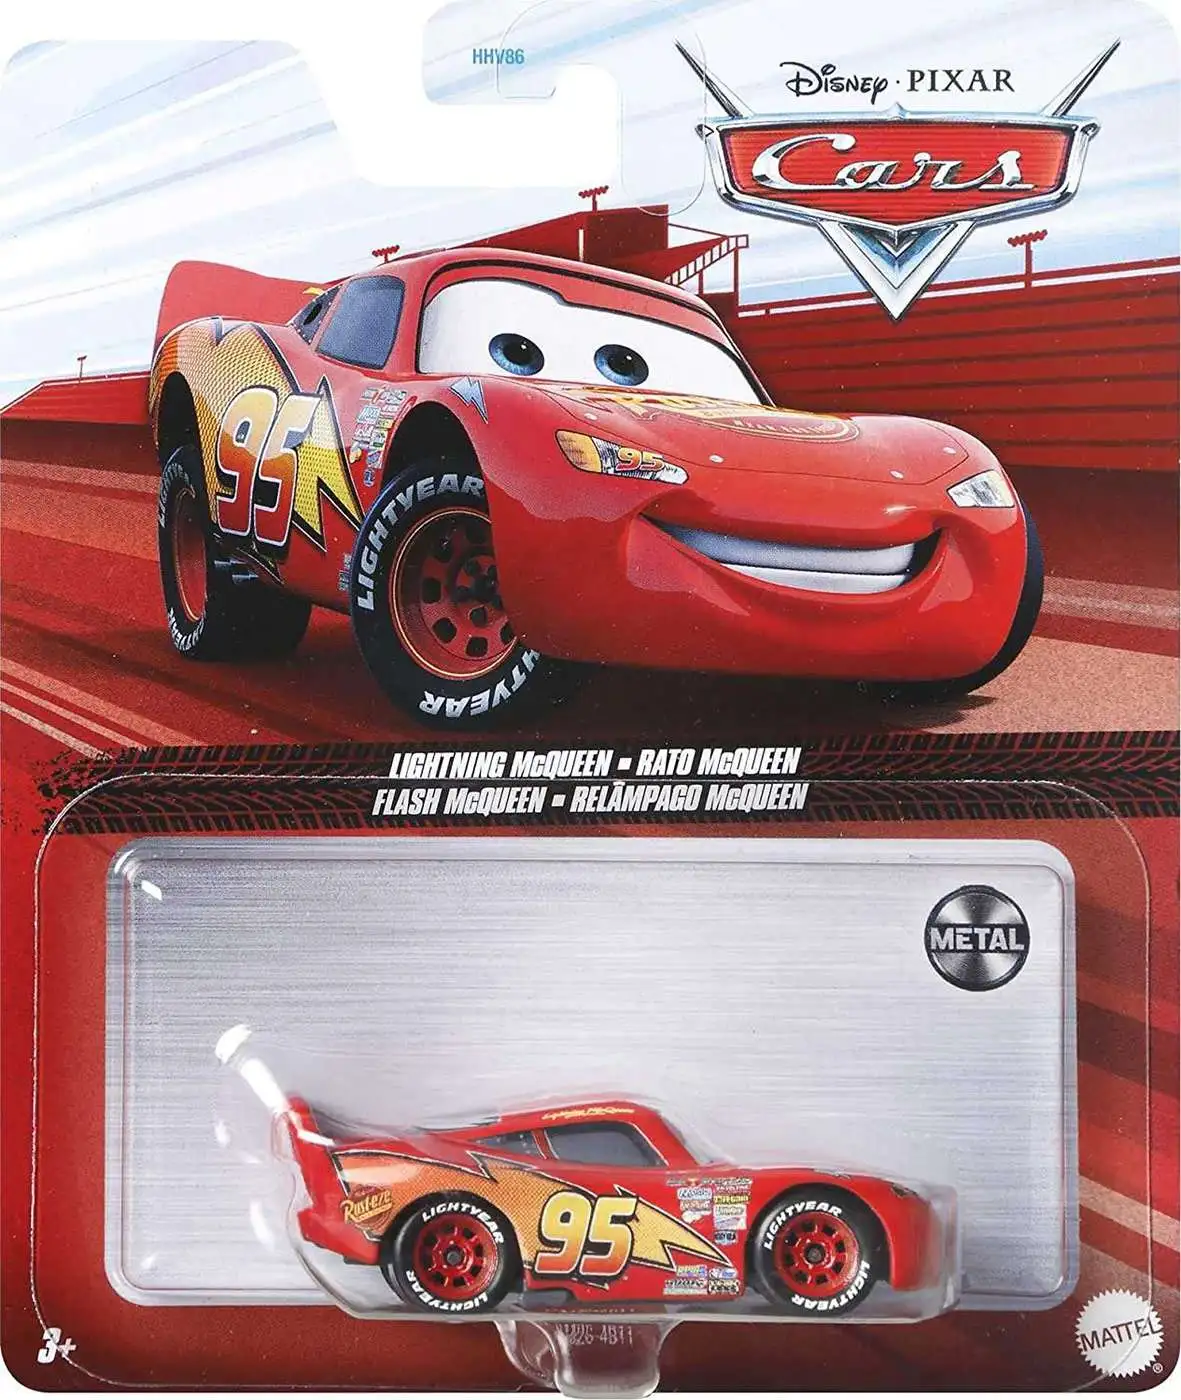 Mattel Disney/Pixar Cars 3 Lightning McQueen Die-Cast Vehicle